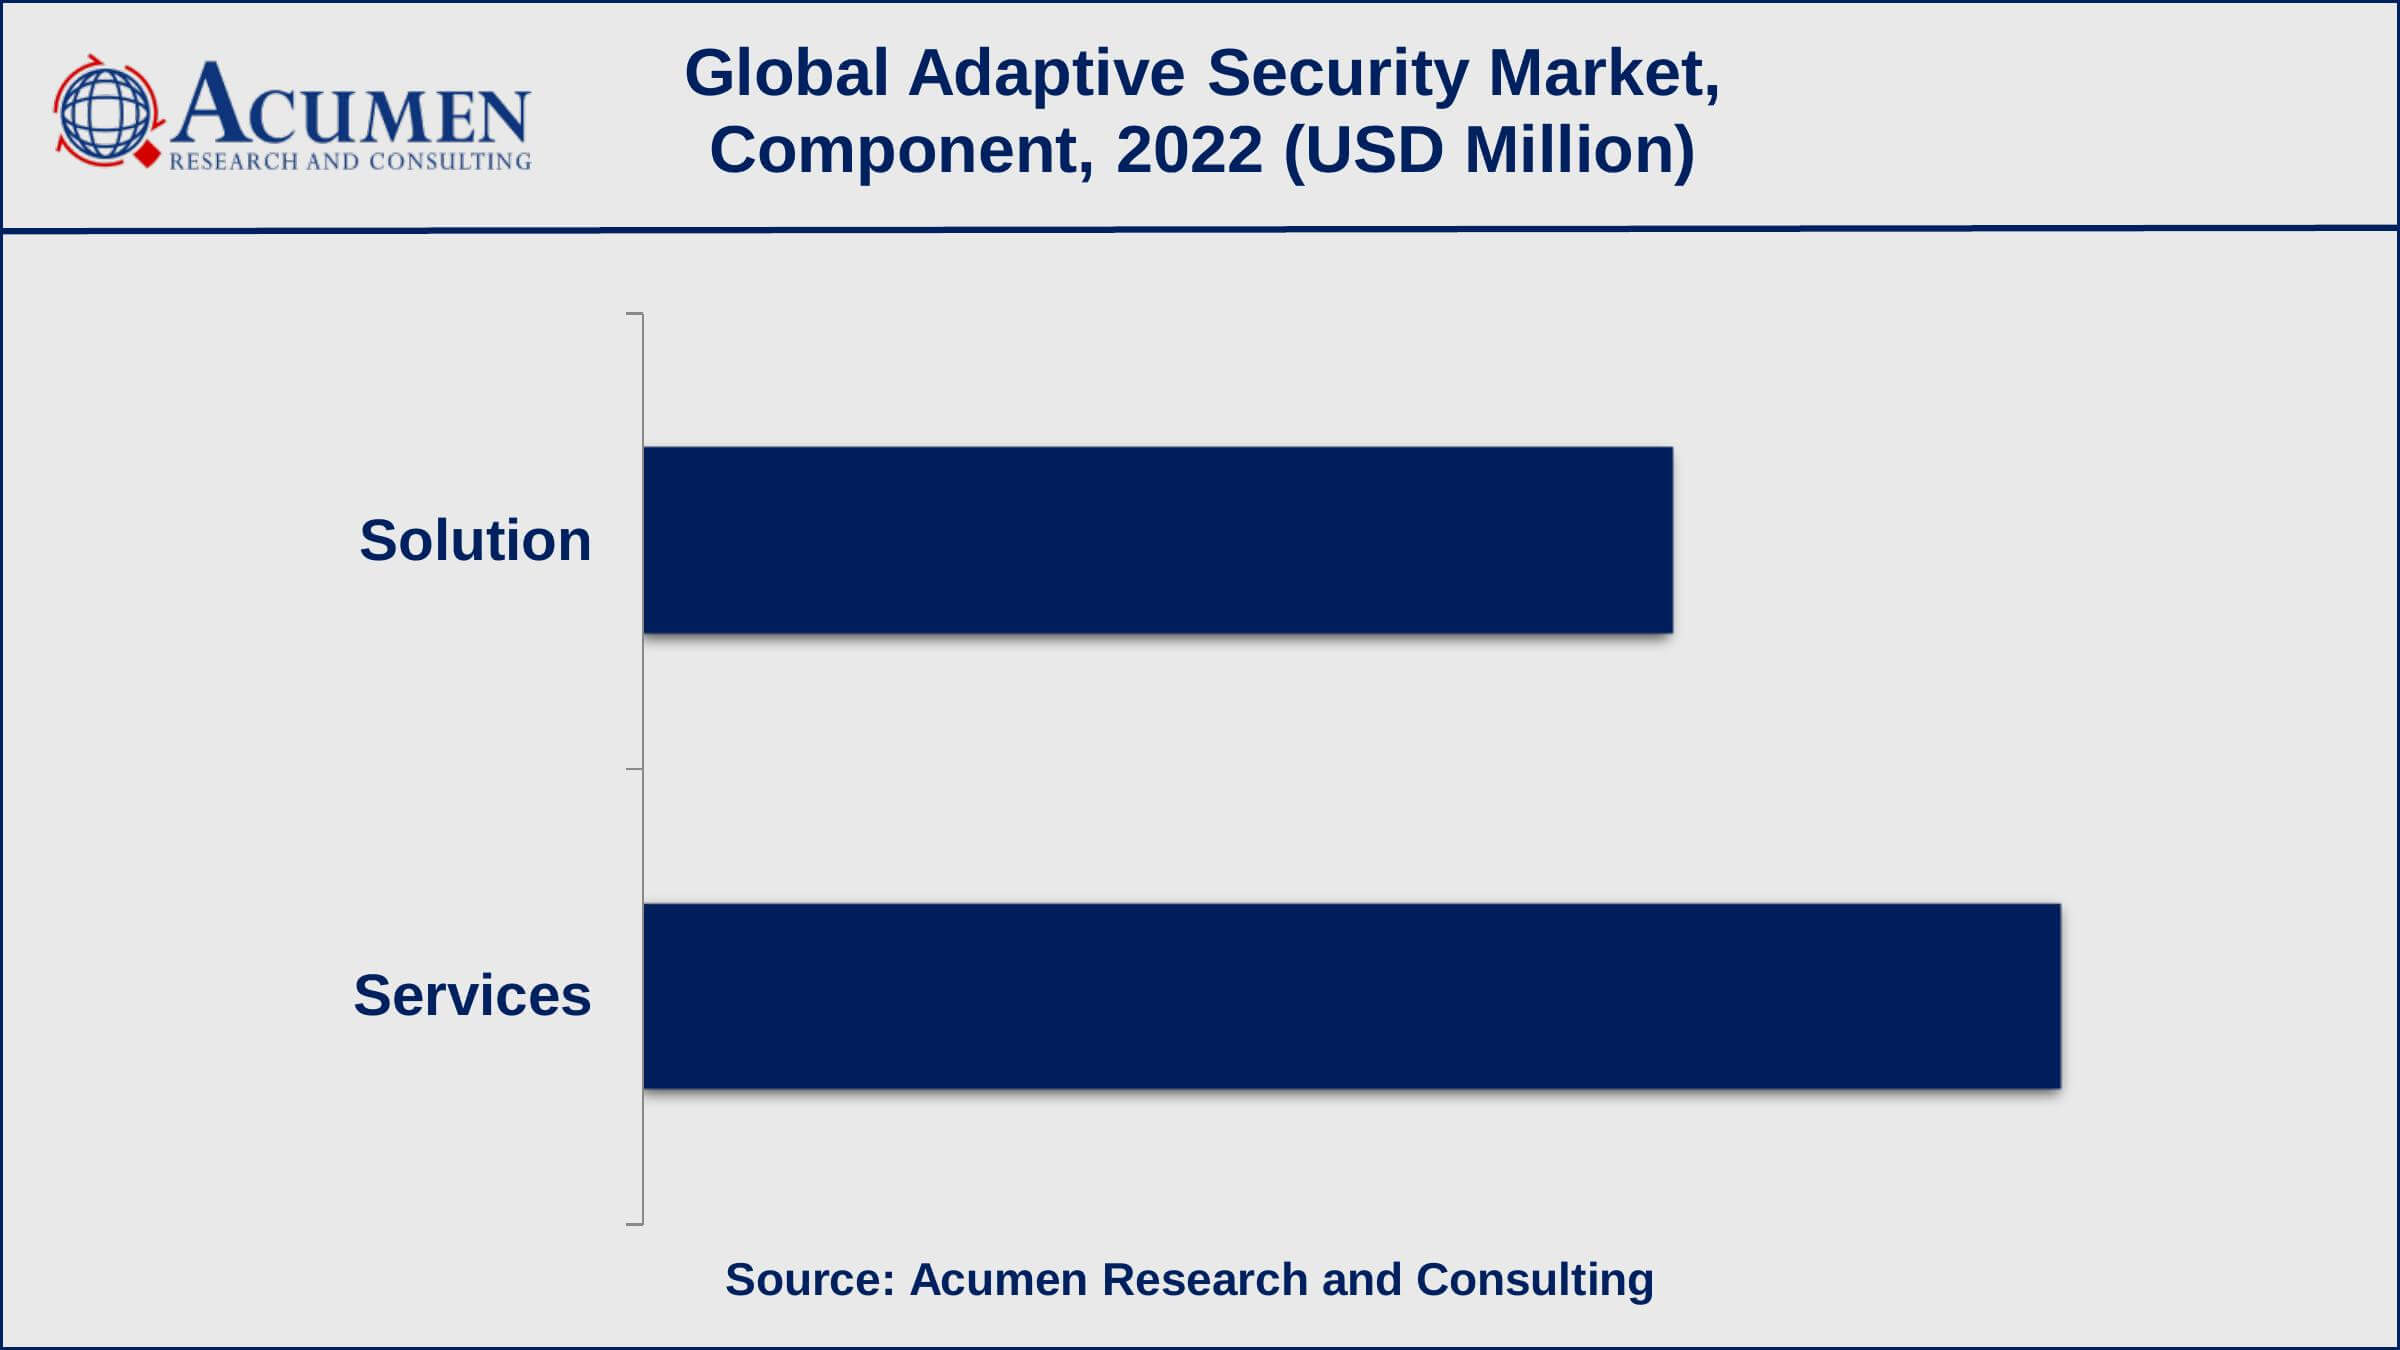 Adaptive Security Market Drivers